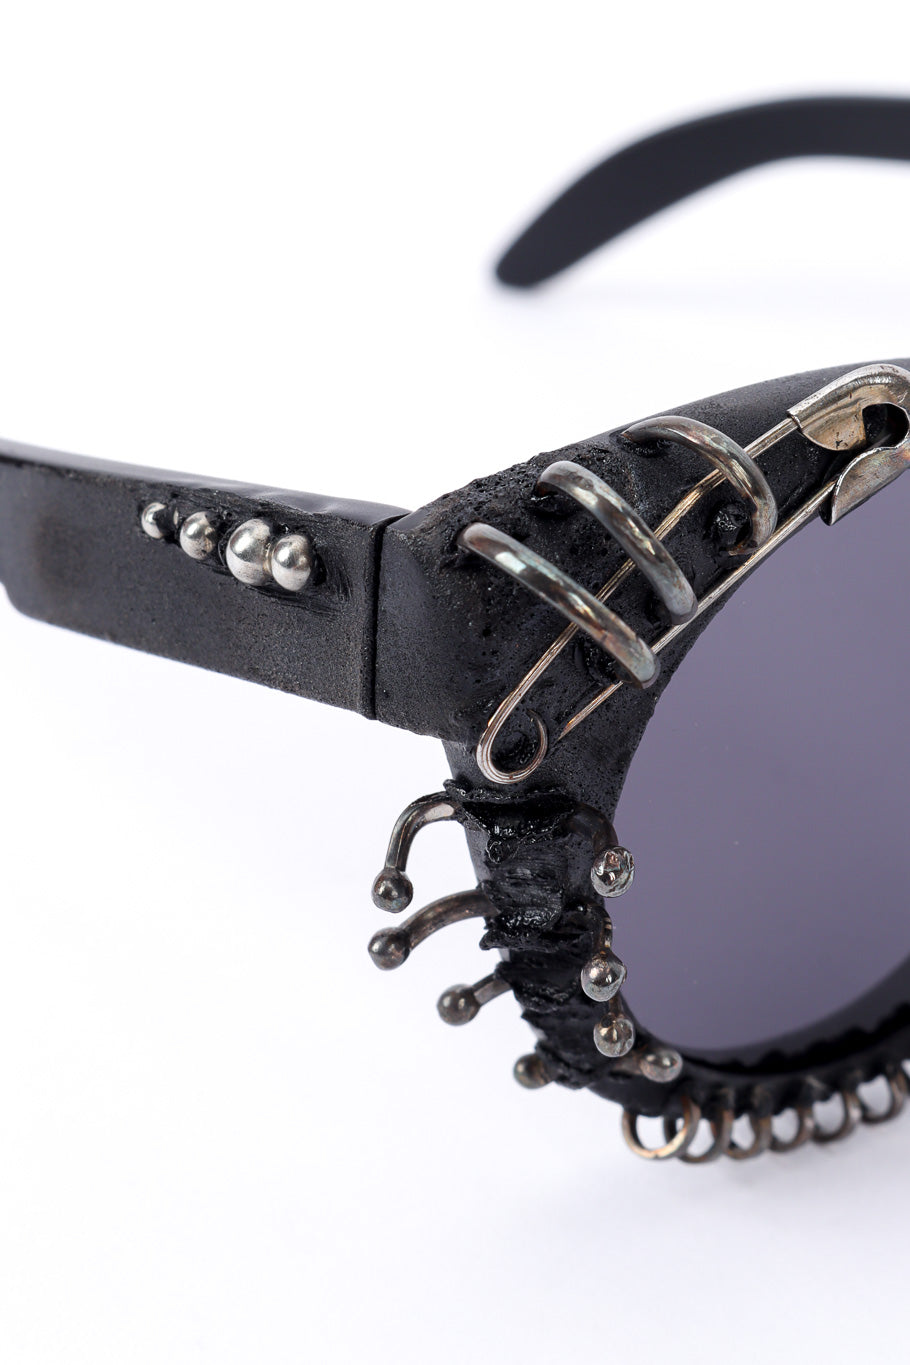 Anarchy sunglasses by Kuboraum on white background stud rings close @recessla